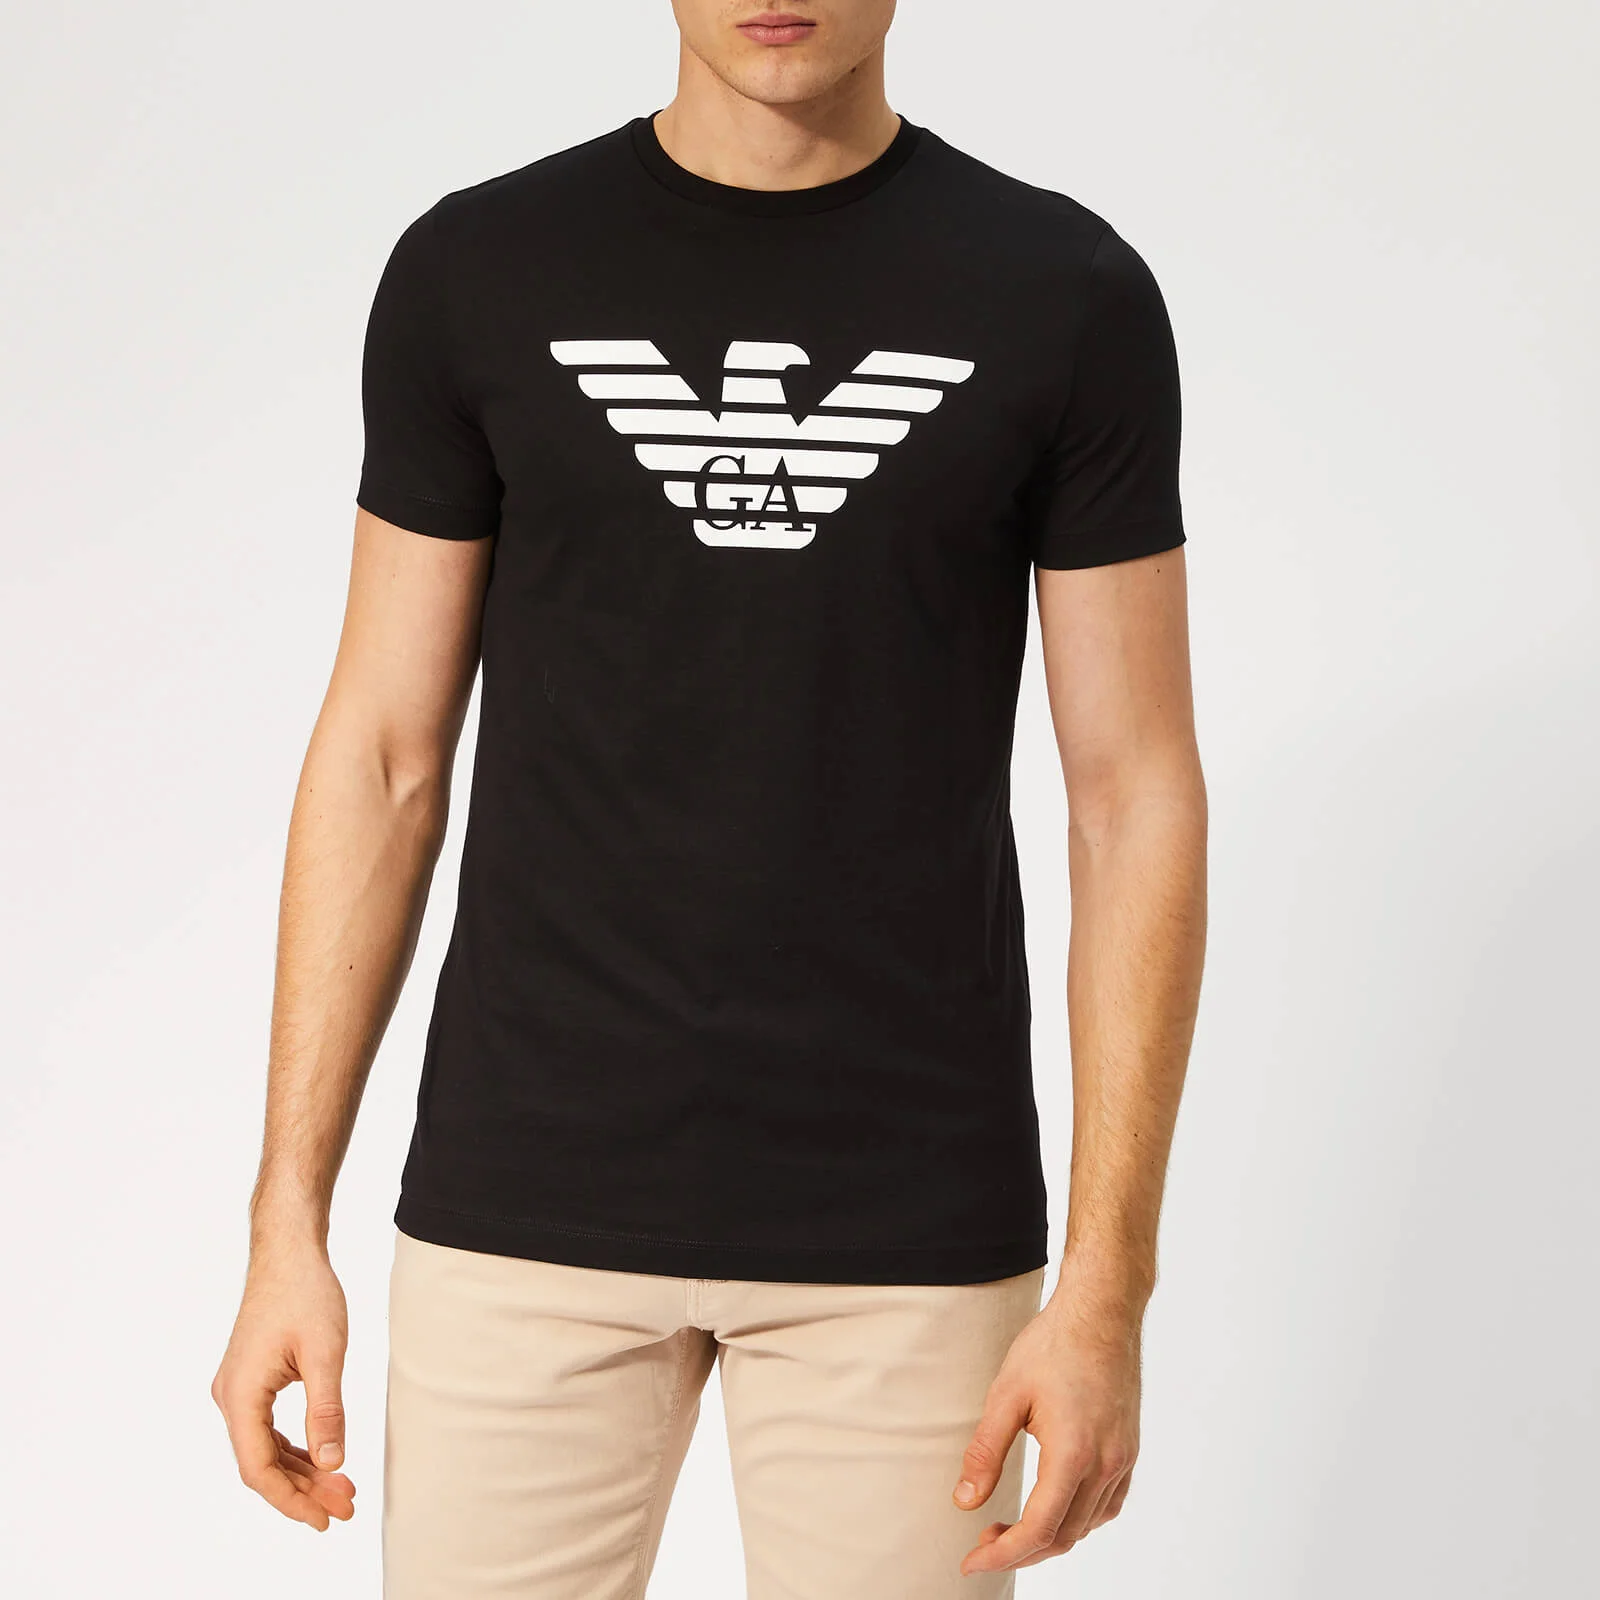 Emporio Armani Men's Large GA Eagle Logo T-Shirt - Nero Image 1